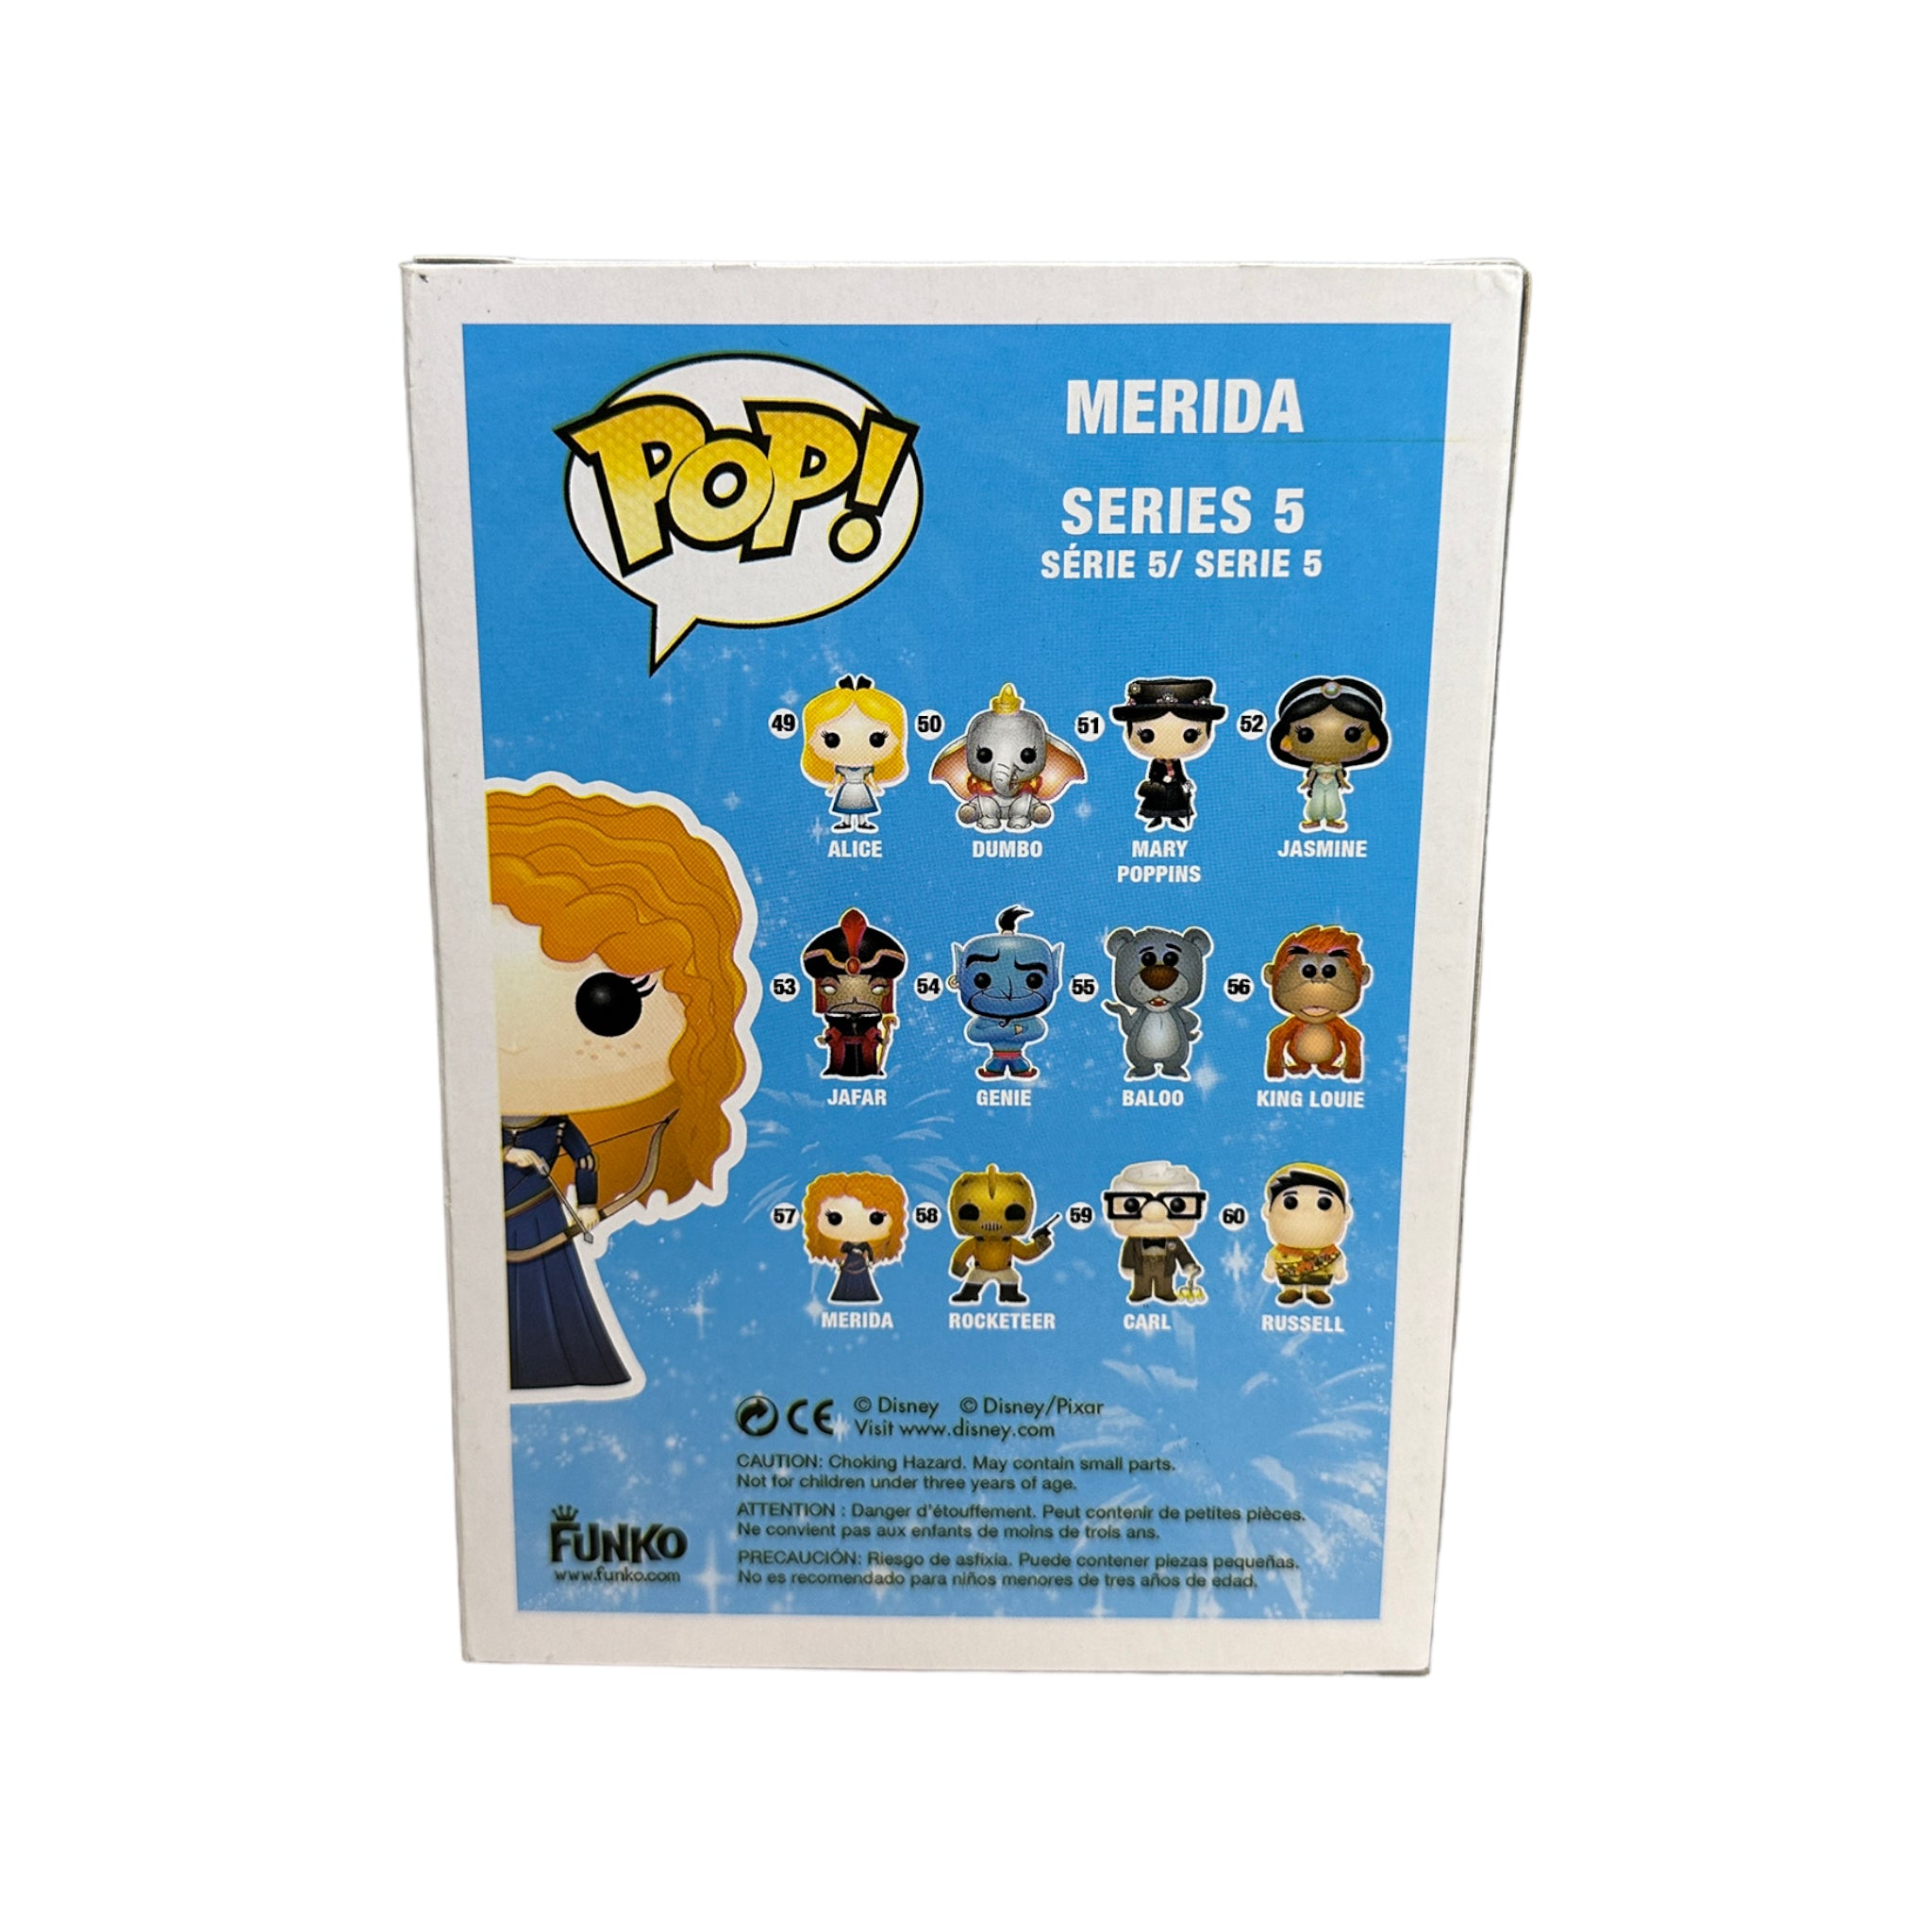 Merida #57 (Metallic) Funko Pop! - Disney Series 5 - SDCC 2013 Exclusive LE480 Pcs - Condition 8.75/10